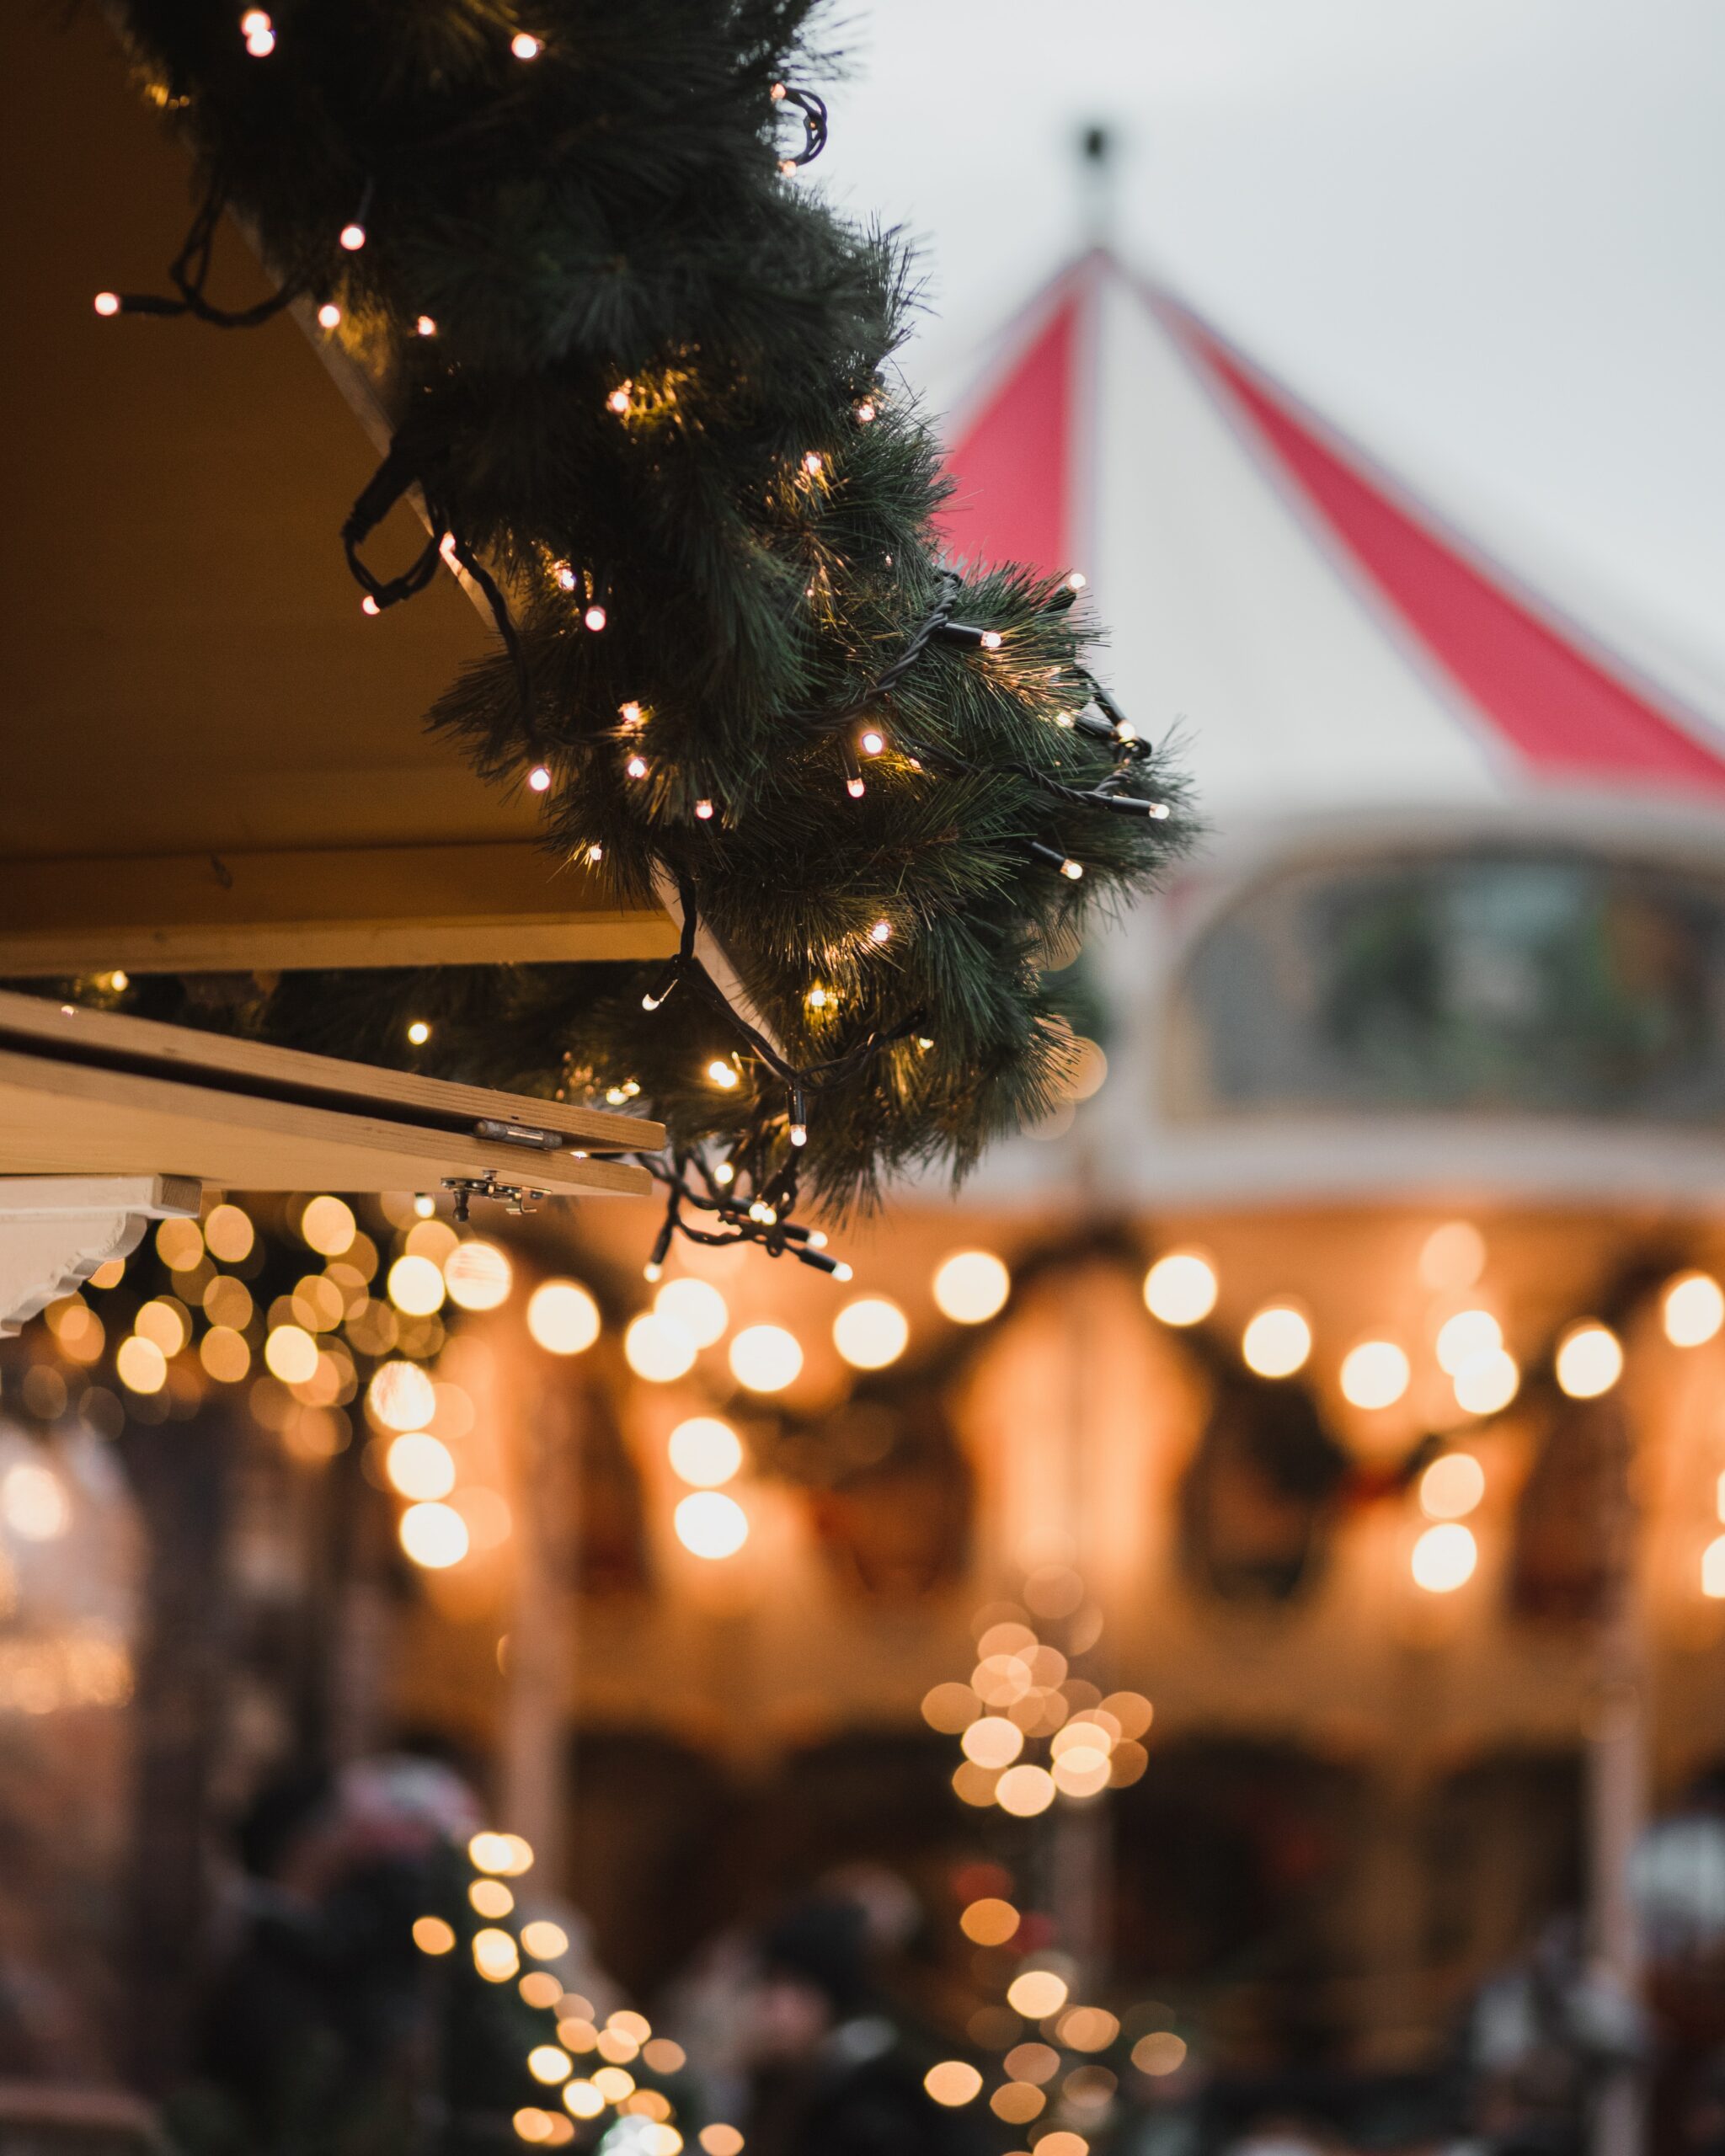 Yorkshire’s Christmas markets: a festive guide